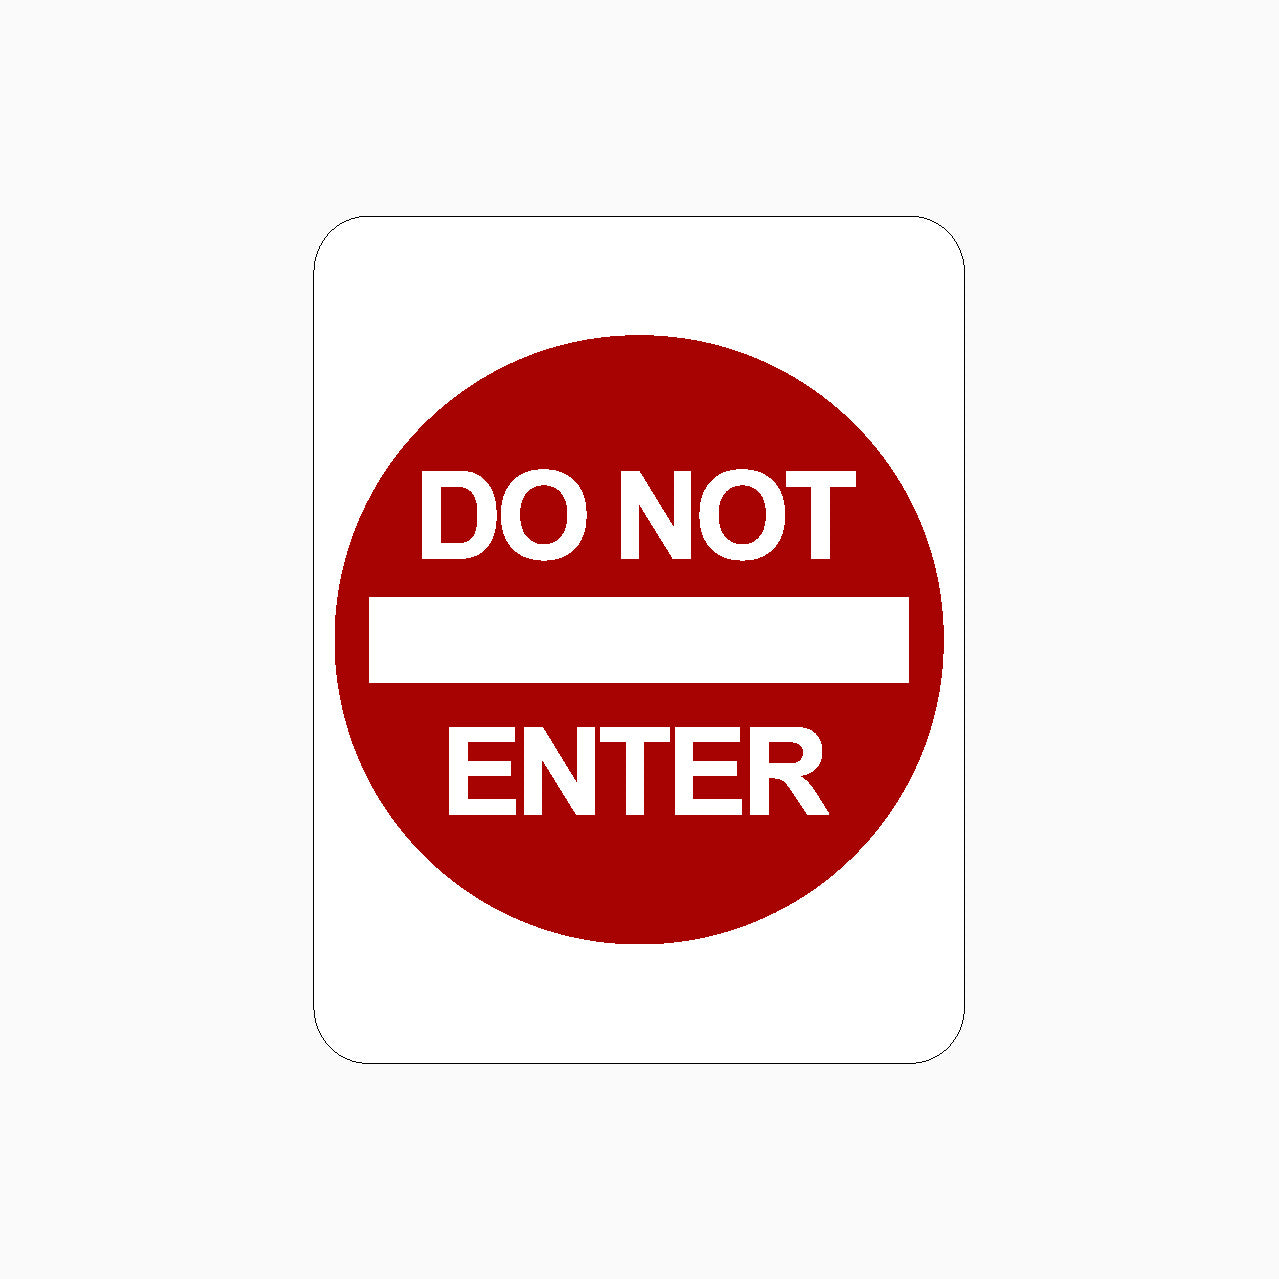 DO NOT ENTER SIGN - ROAD NAD TRAFFIC SIGN